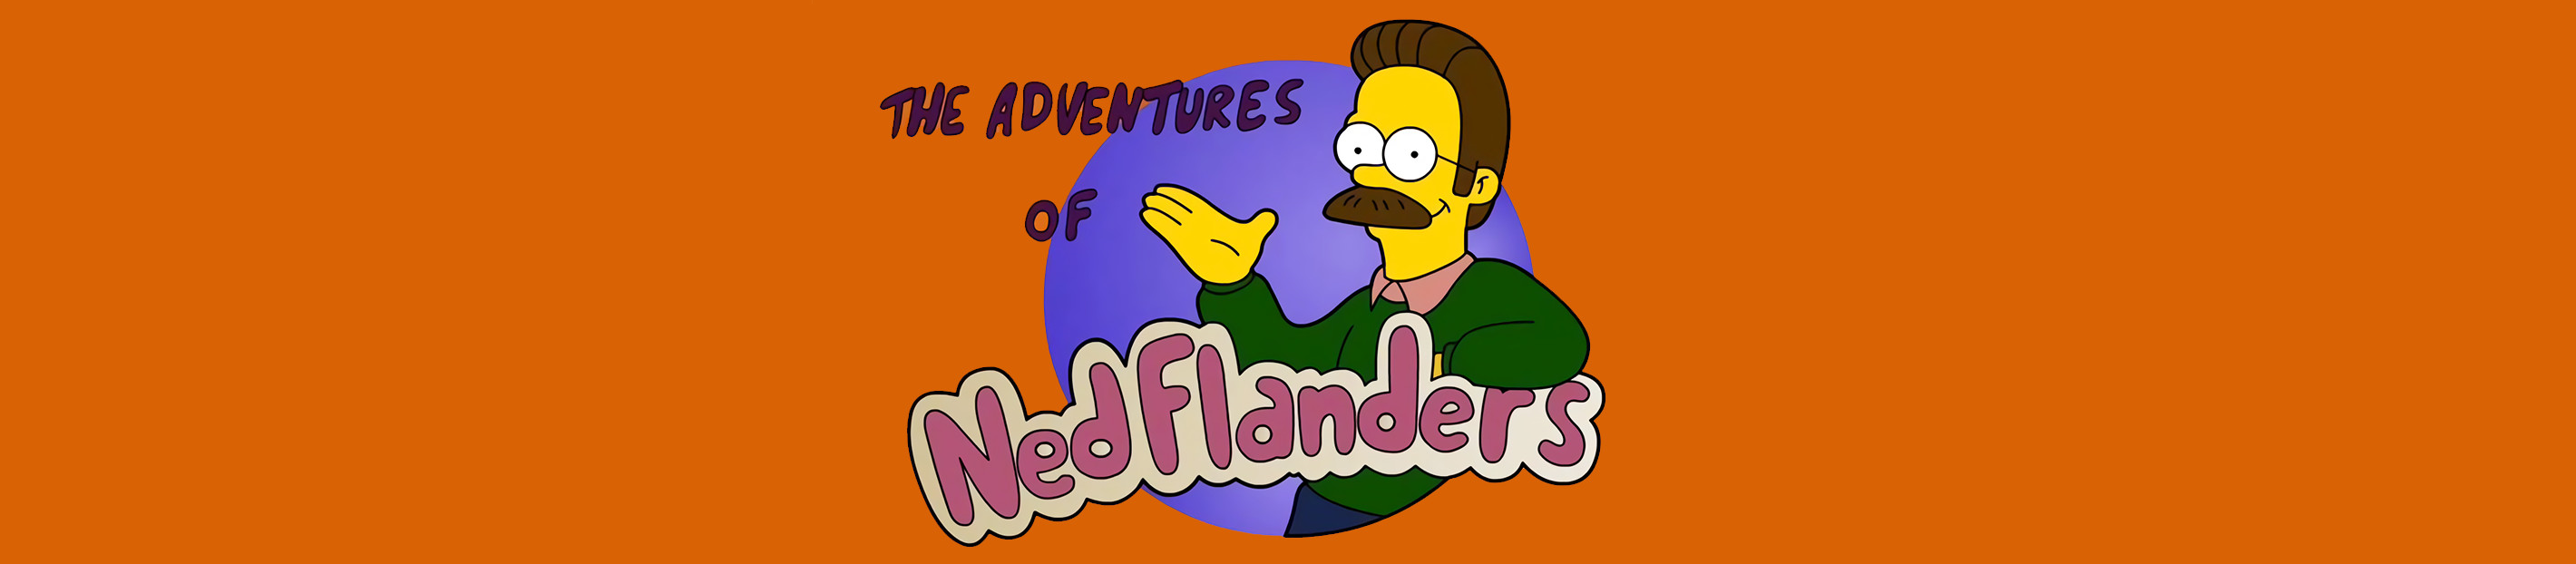 FlandersBOT Banner